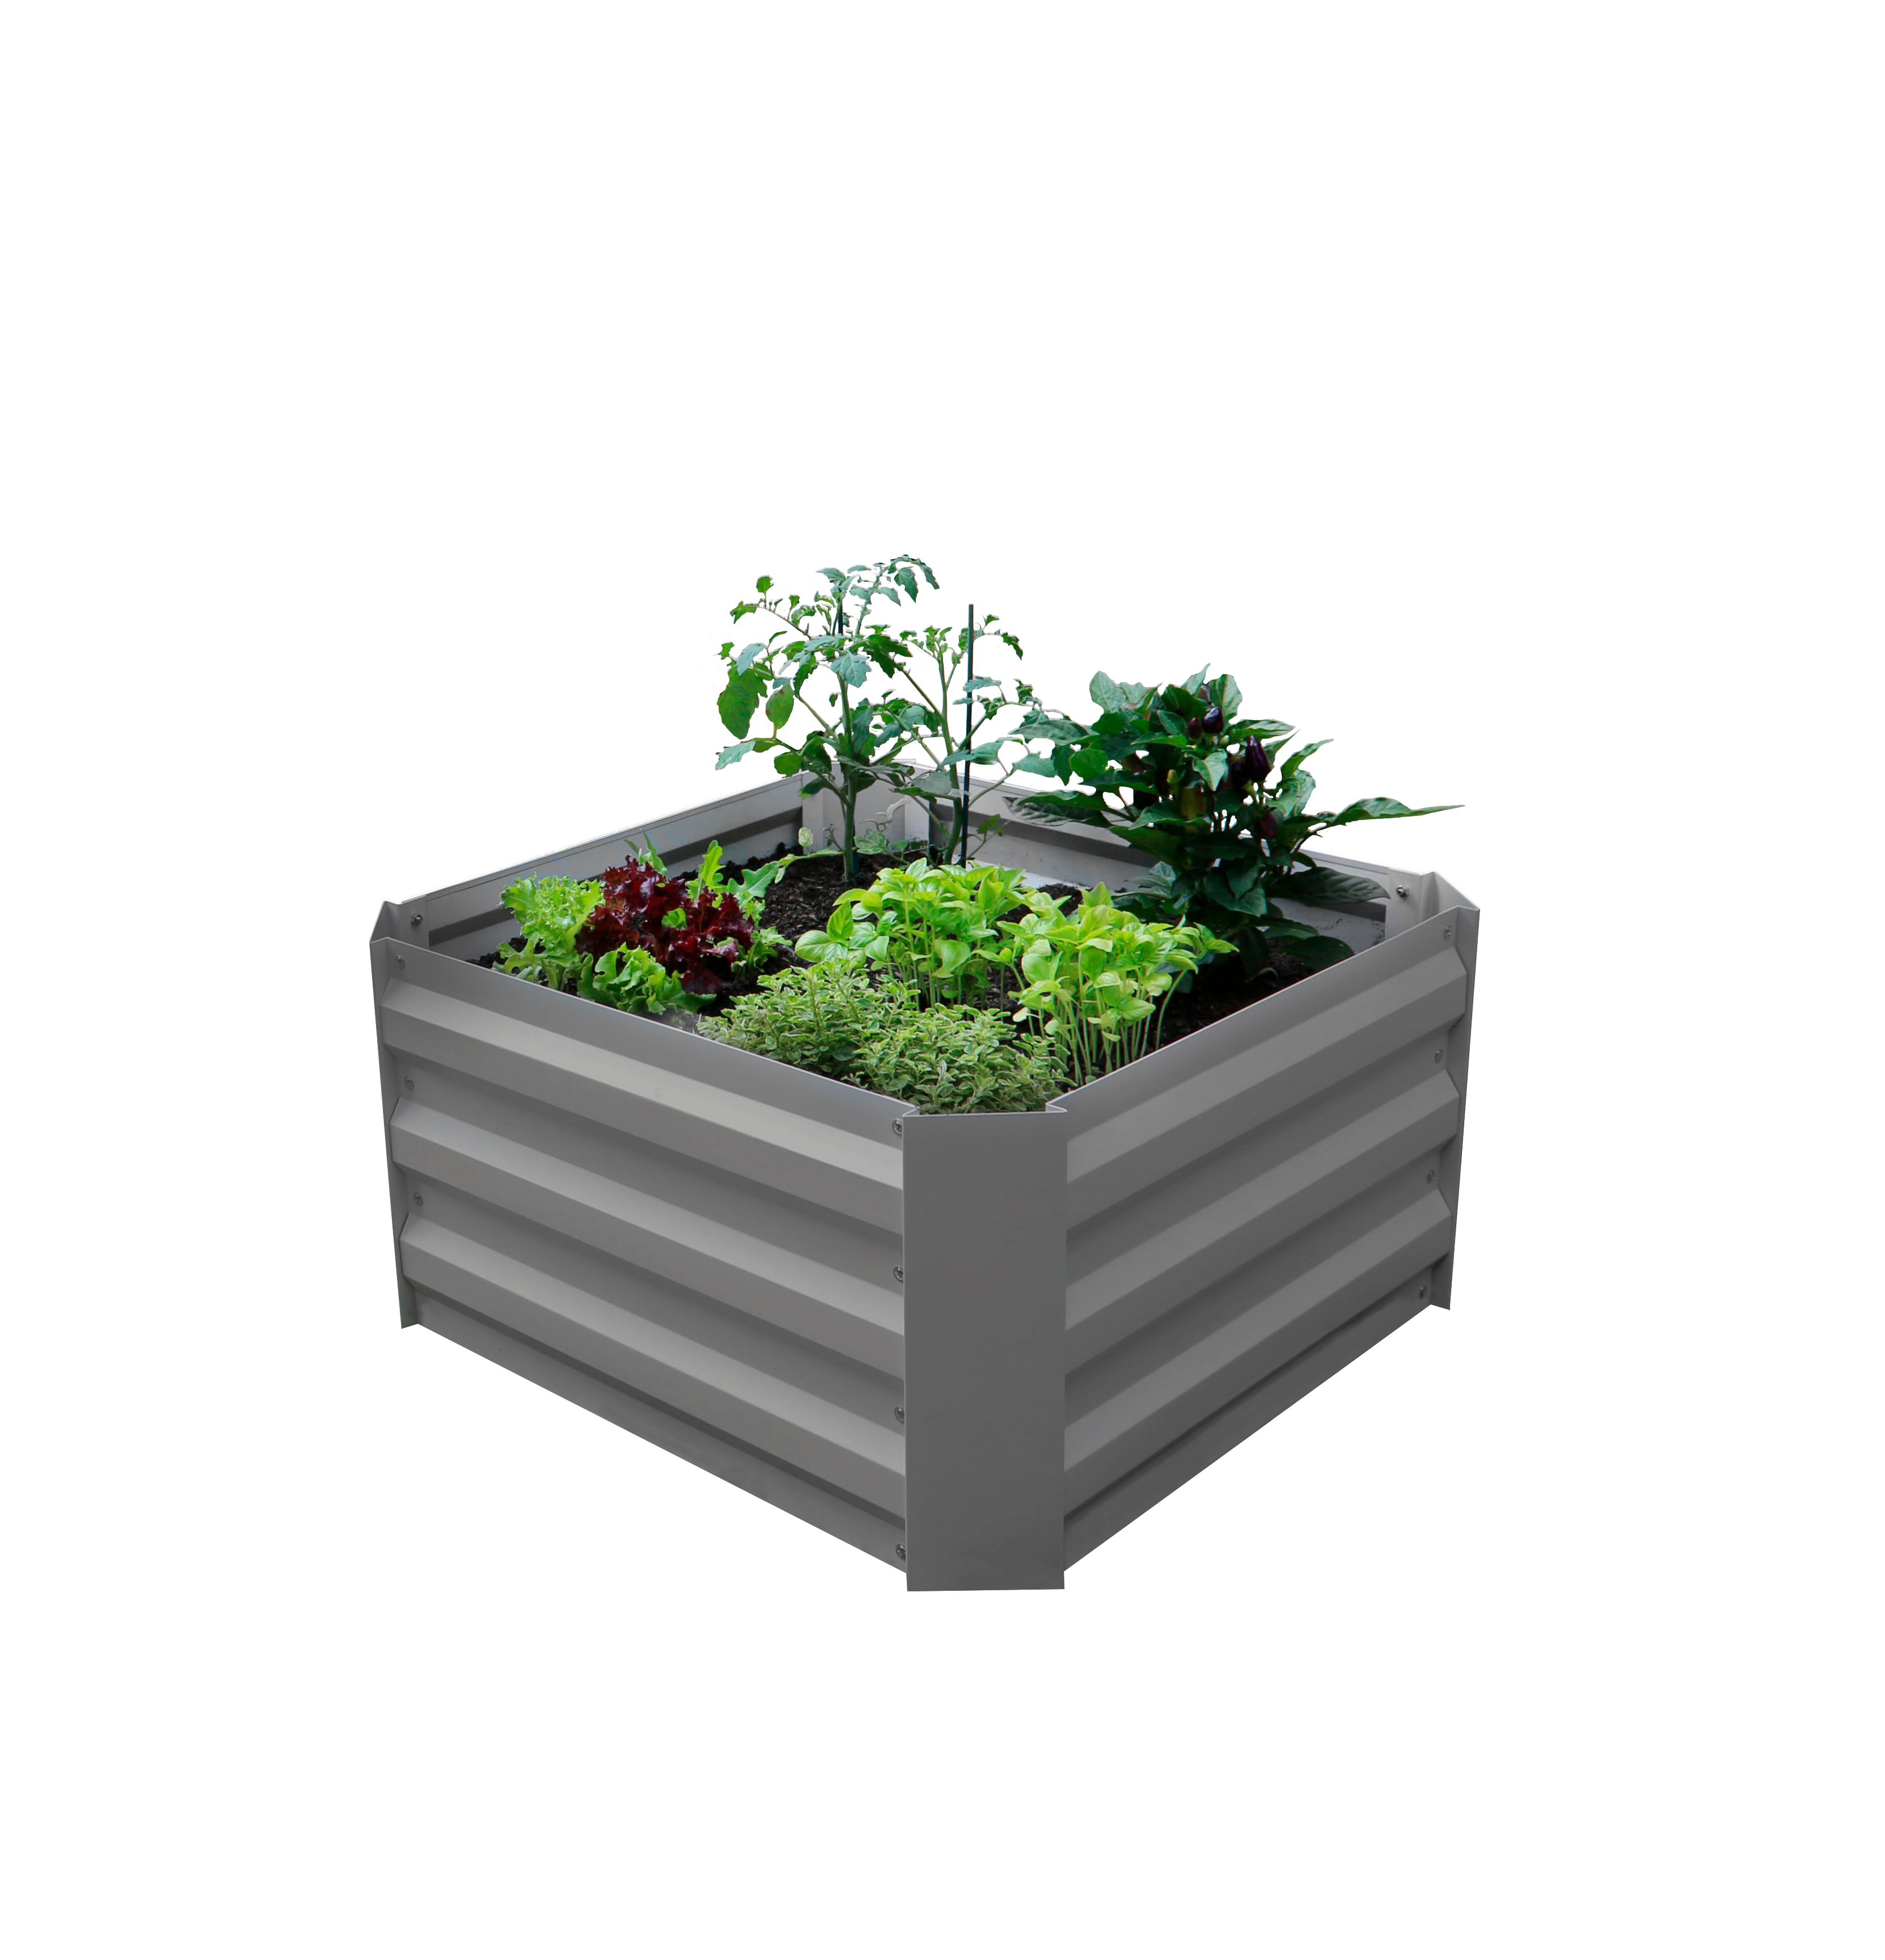 Gardenlife - Easy Raised Bed 60 x 60 cm - XS (131660)